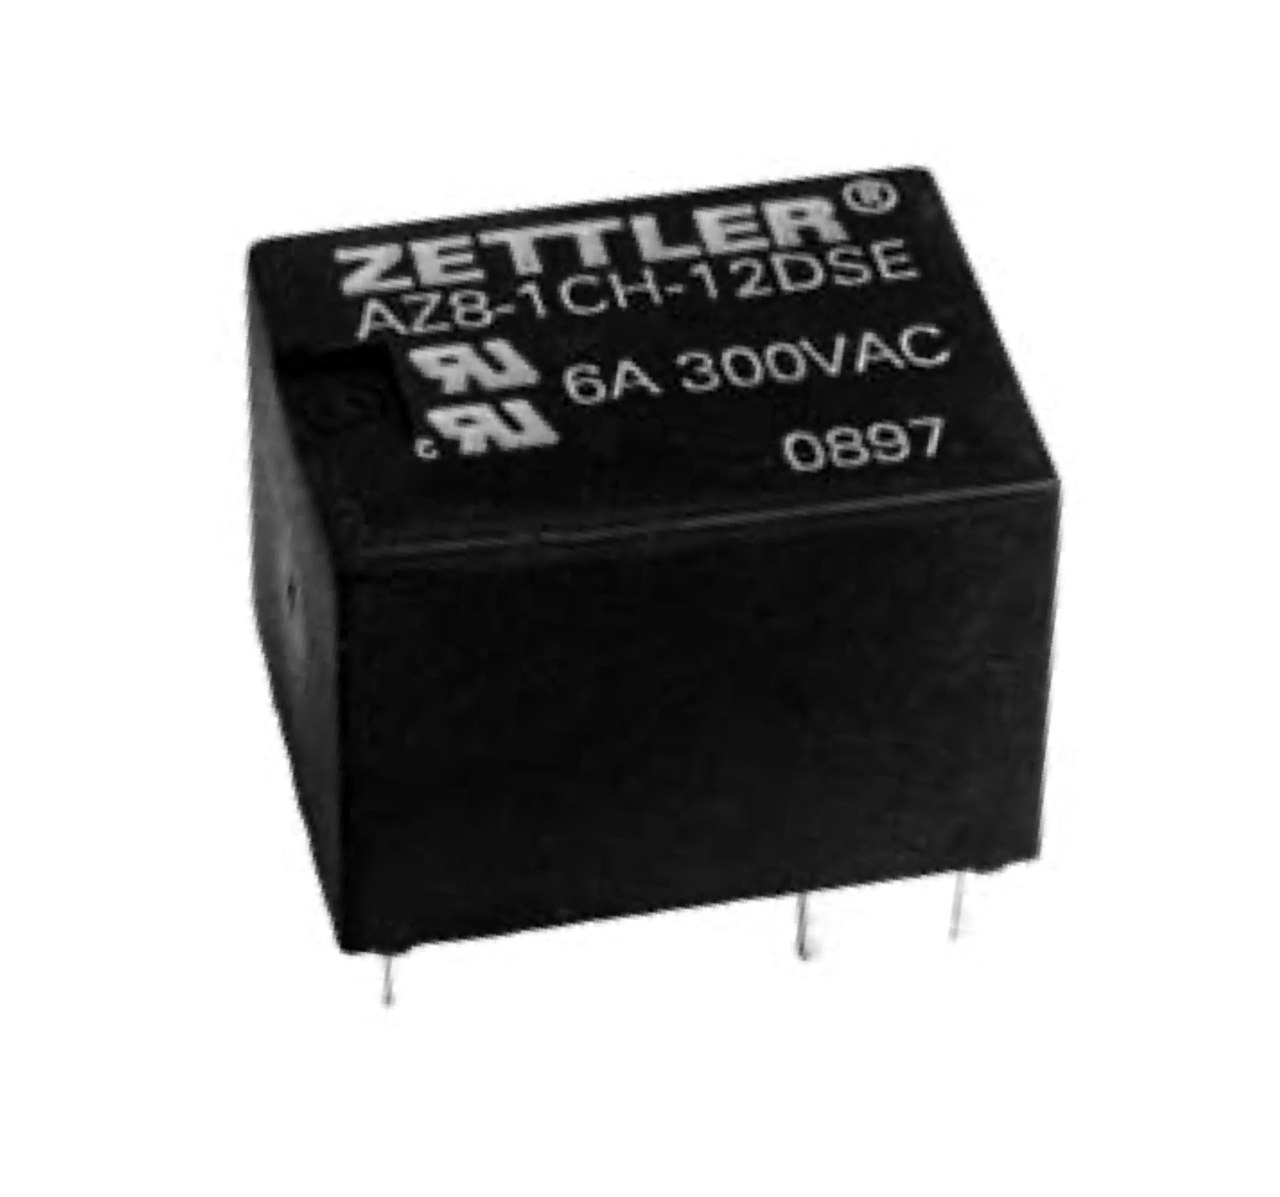 American Zettler AZ8-1C-48DSE Power Relay